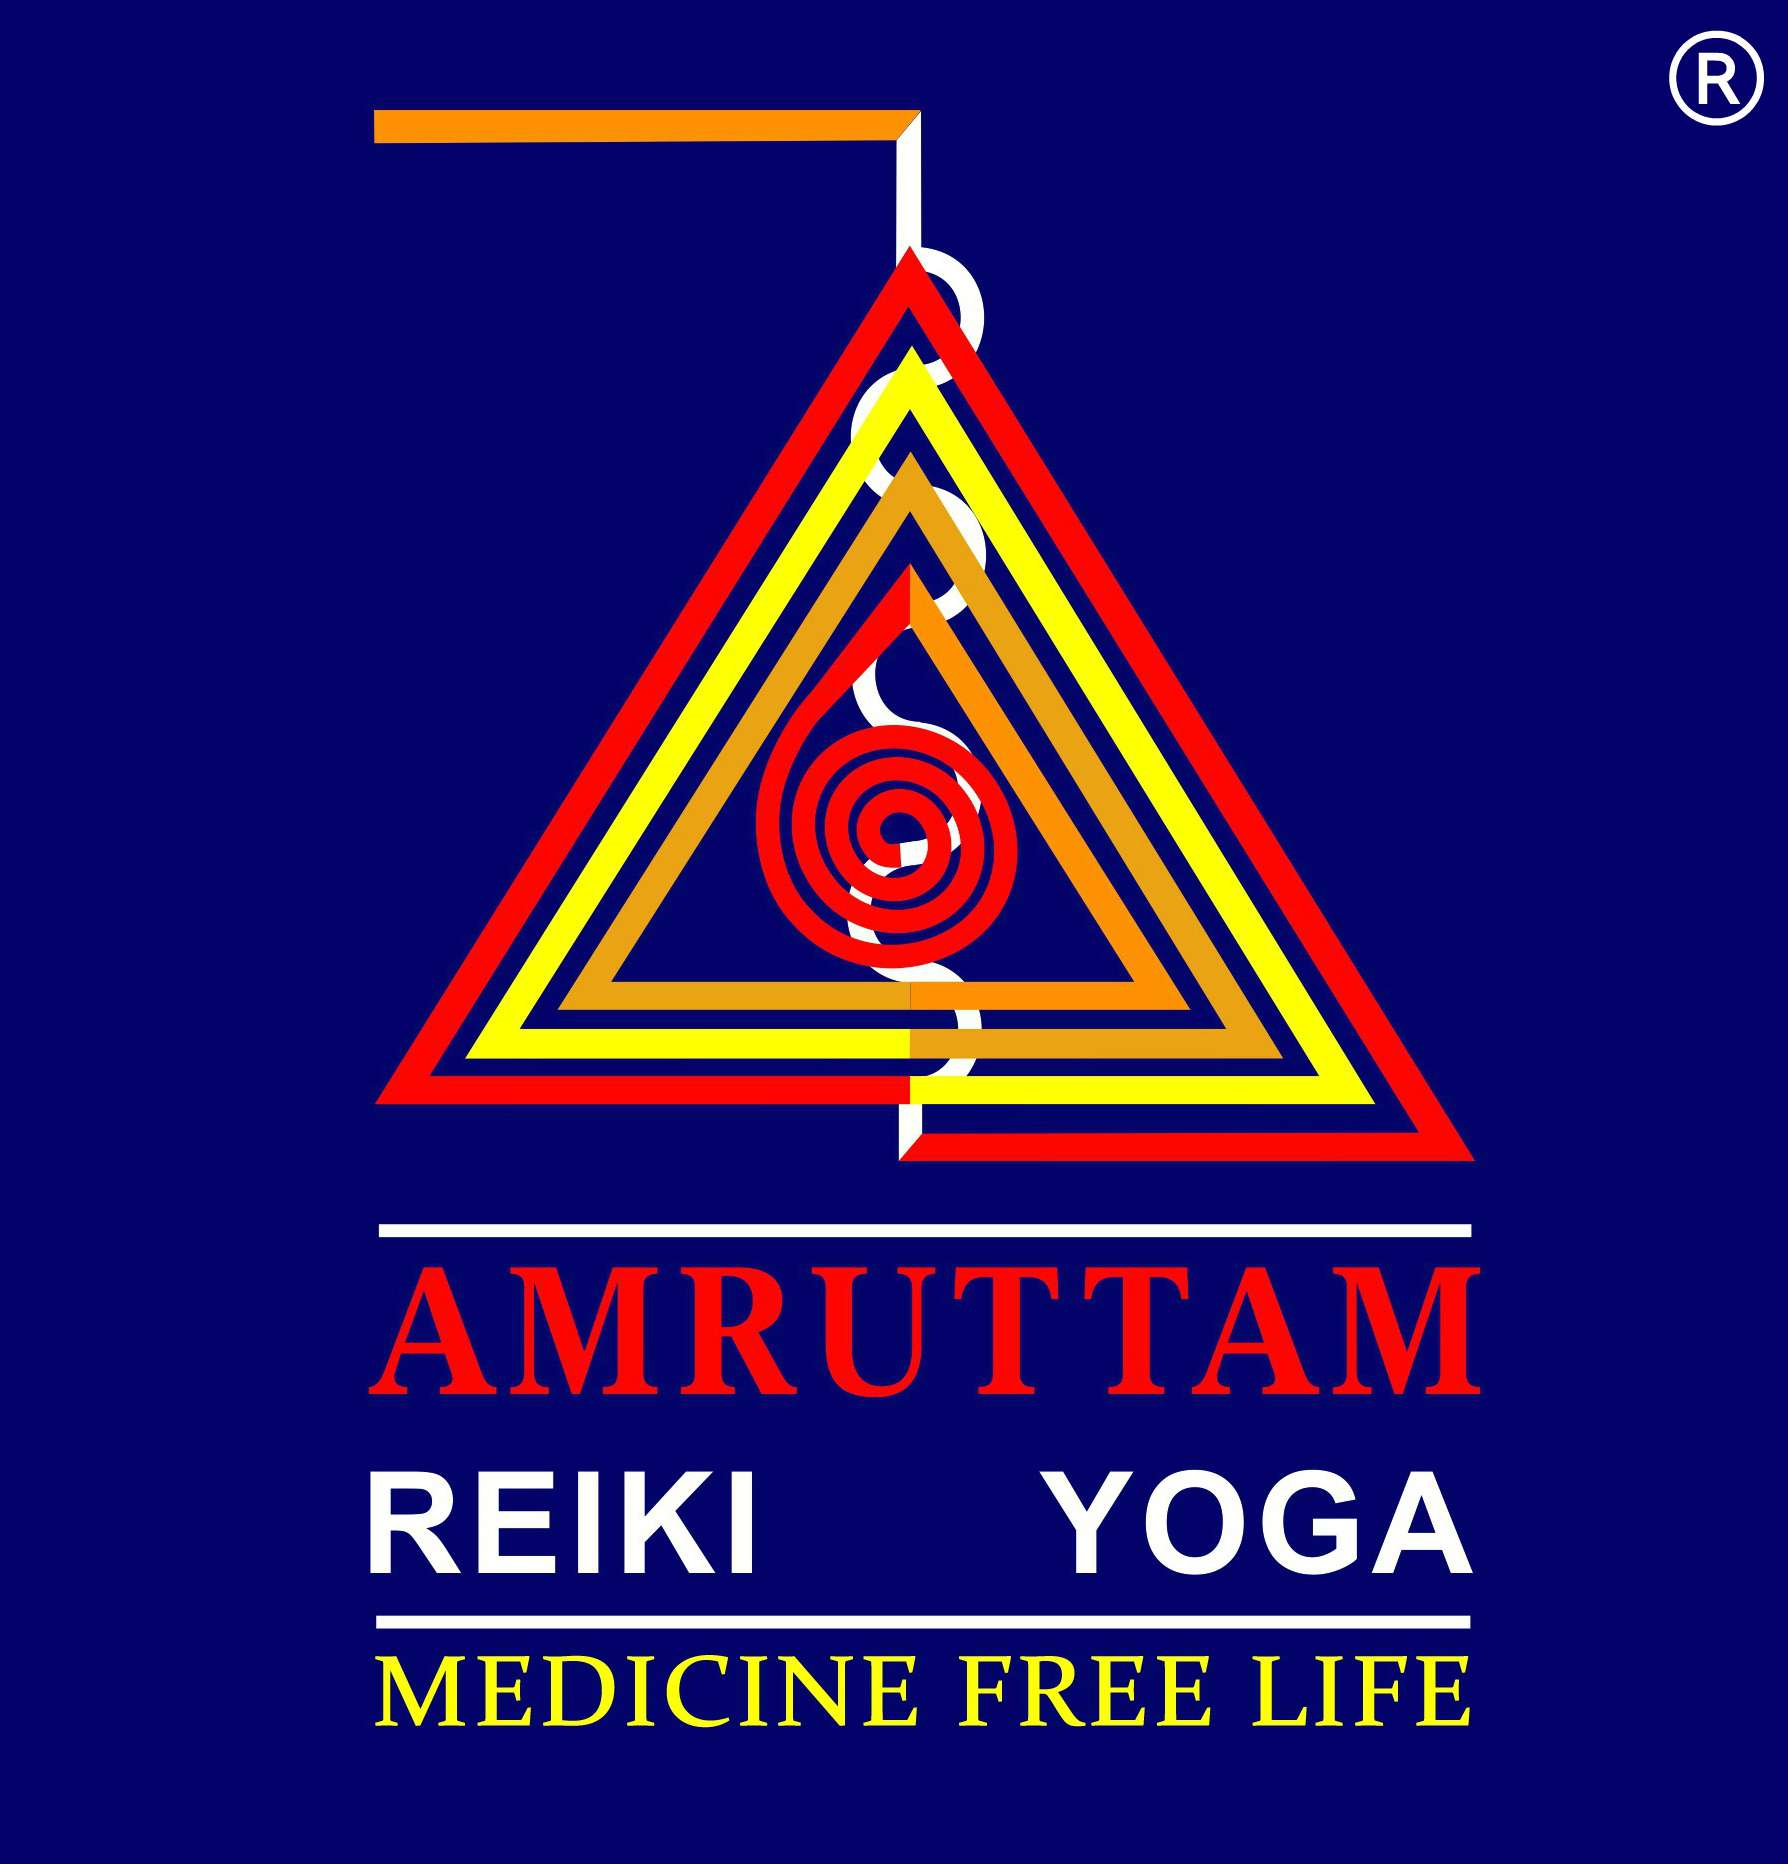 Amruttam Research Institute For Reiki And Yoga